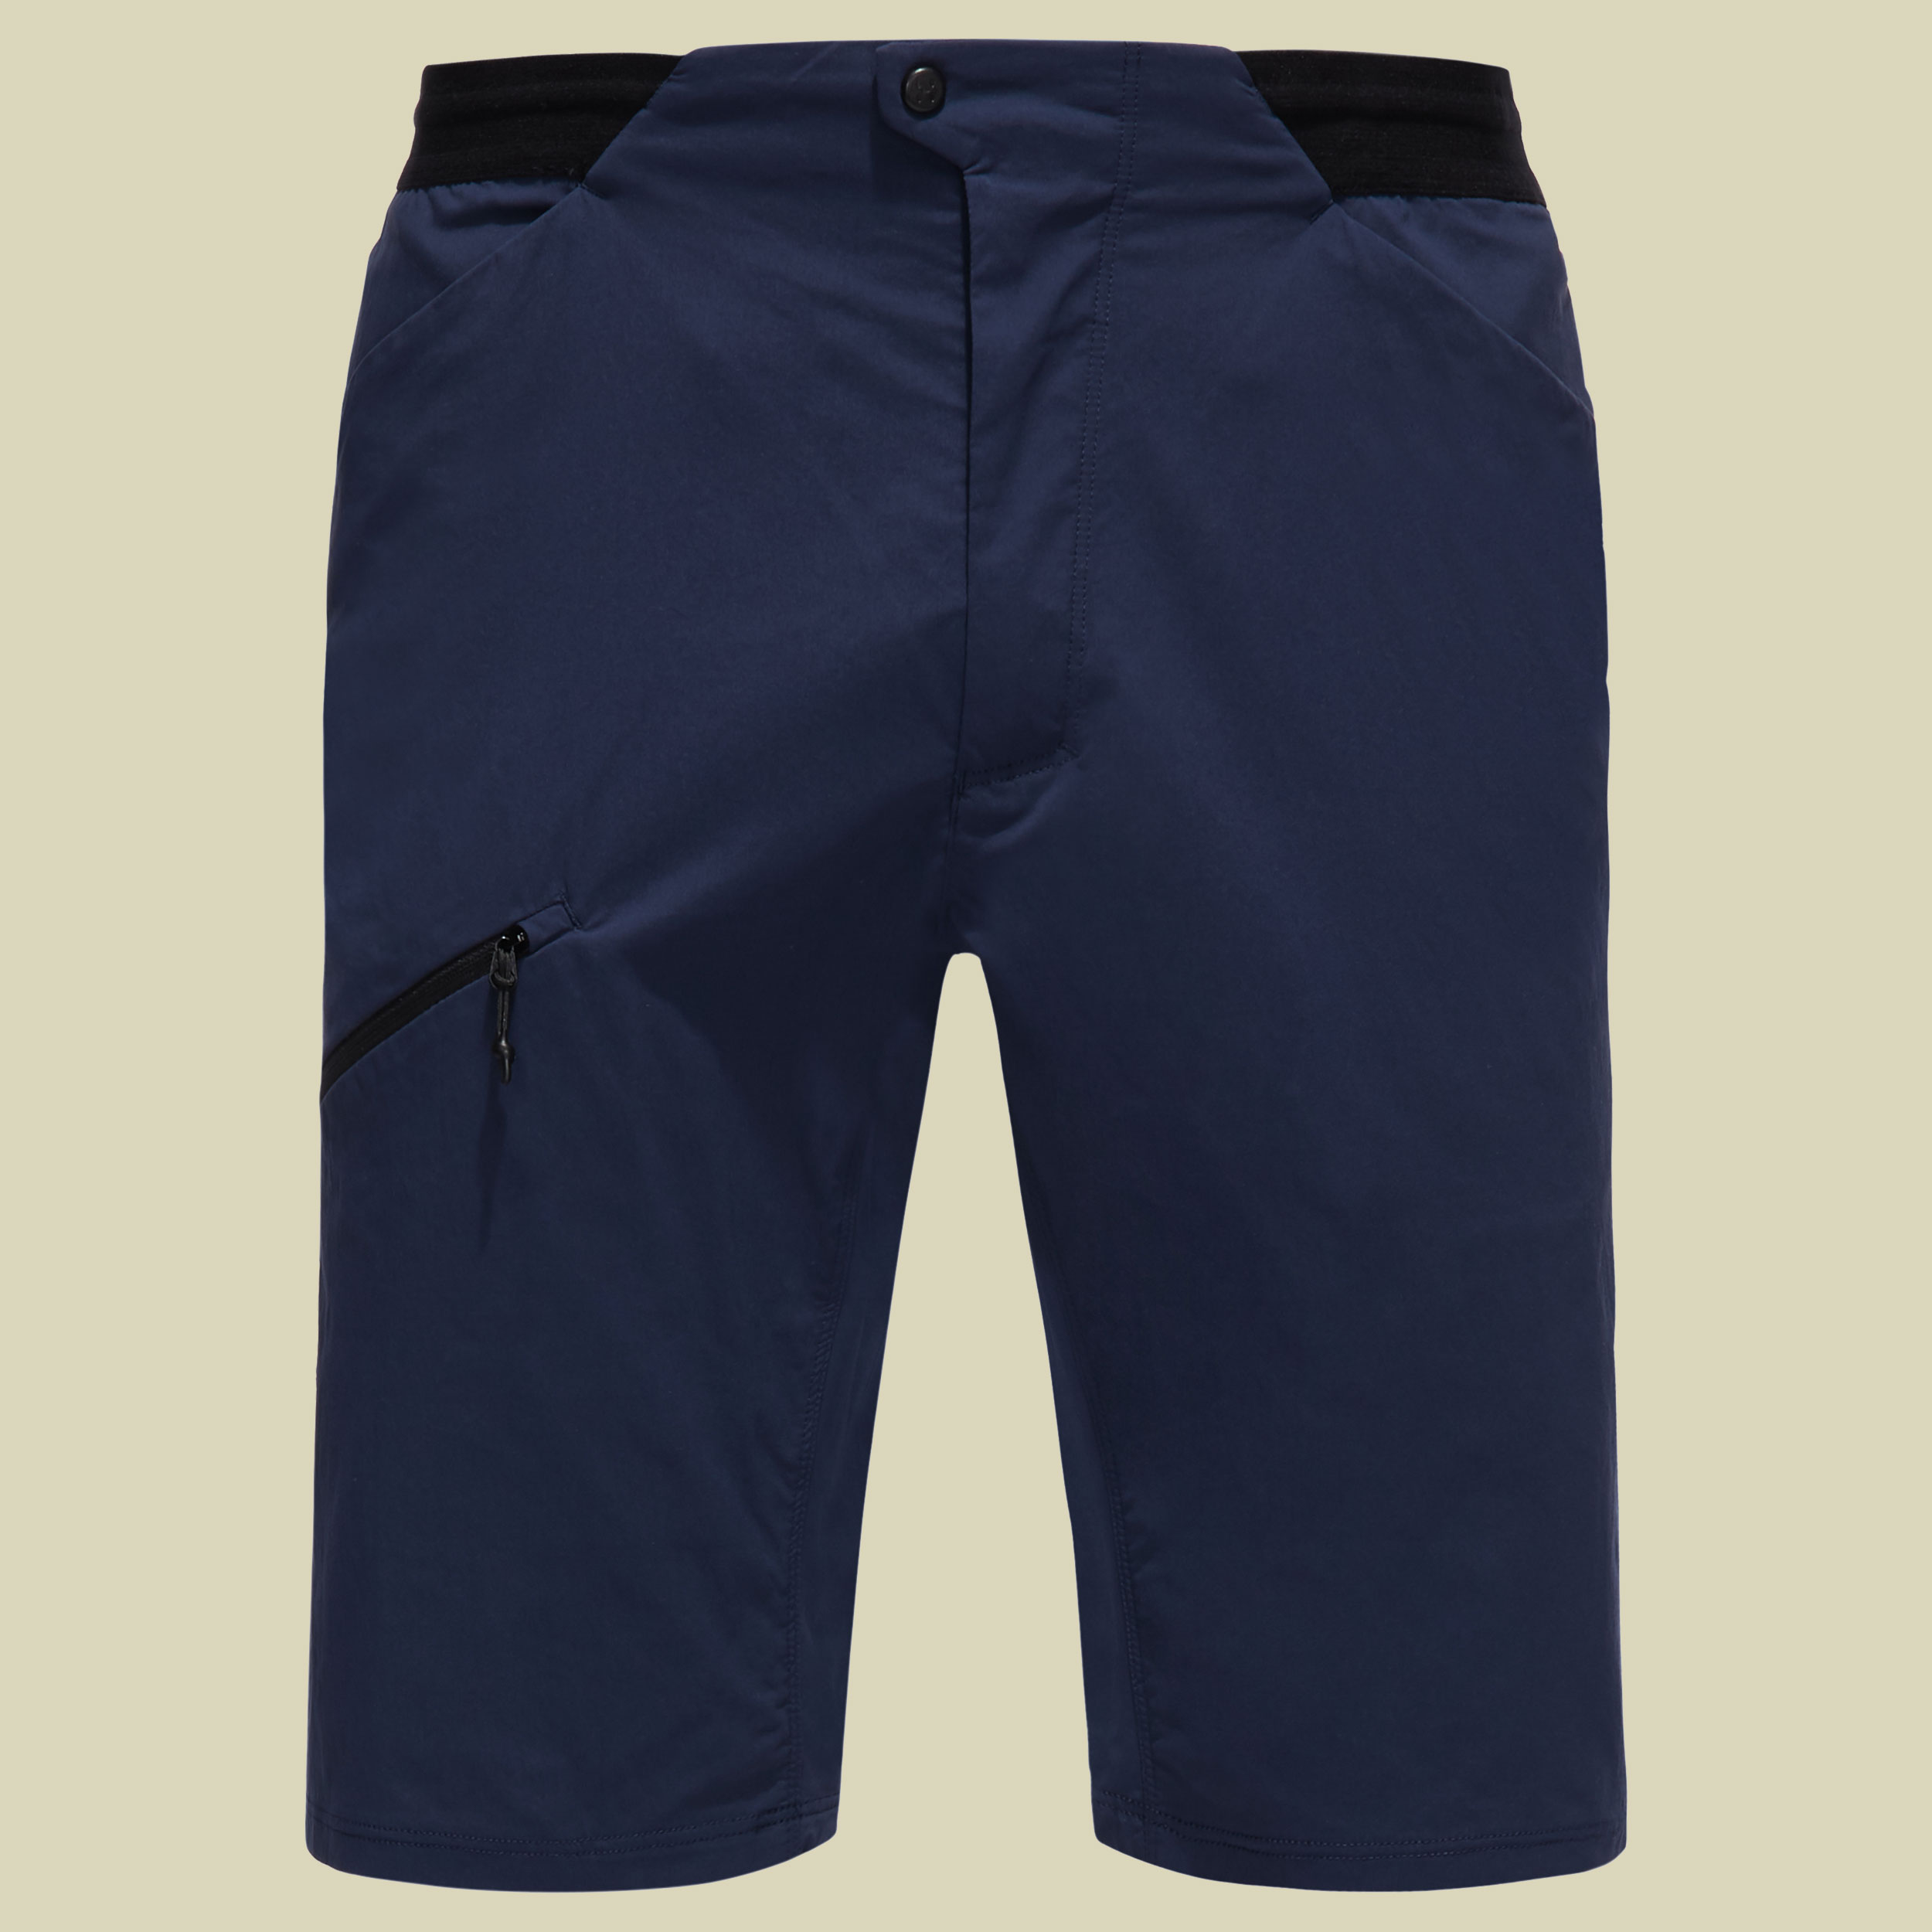 L.I.M. Fuse Shorts Men 56 blau - tarn blue